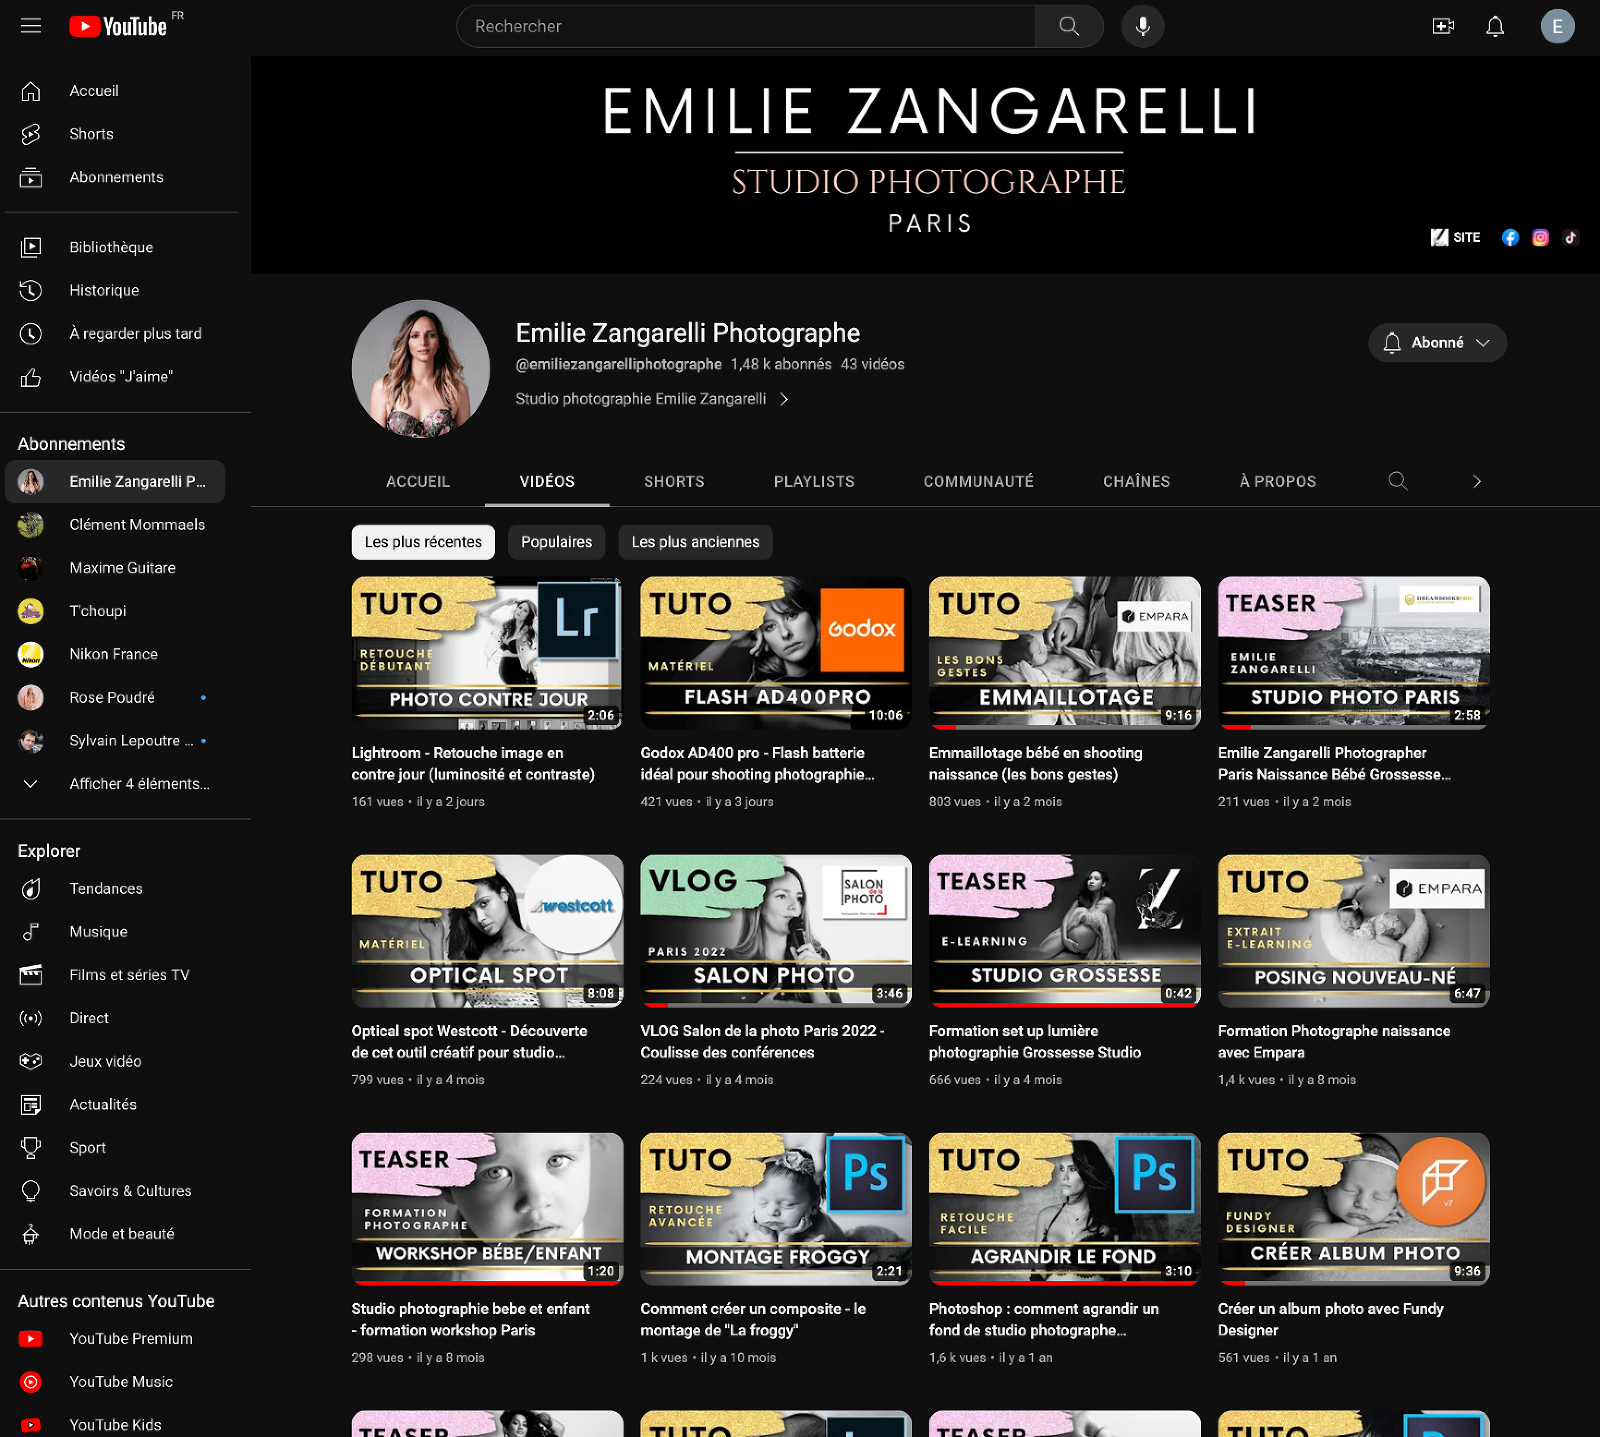 emilie-zangarelli-youtube